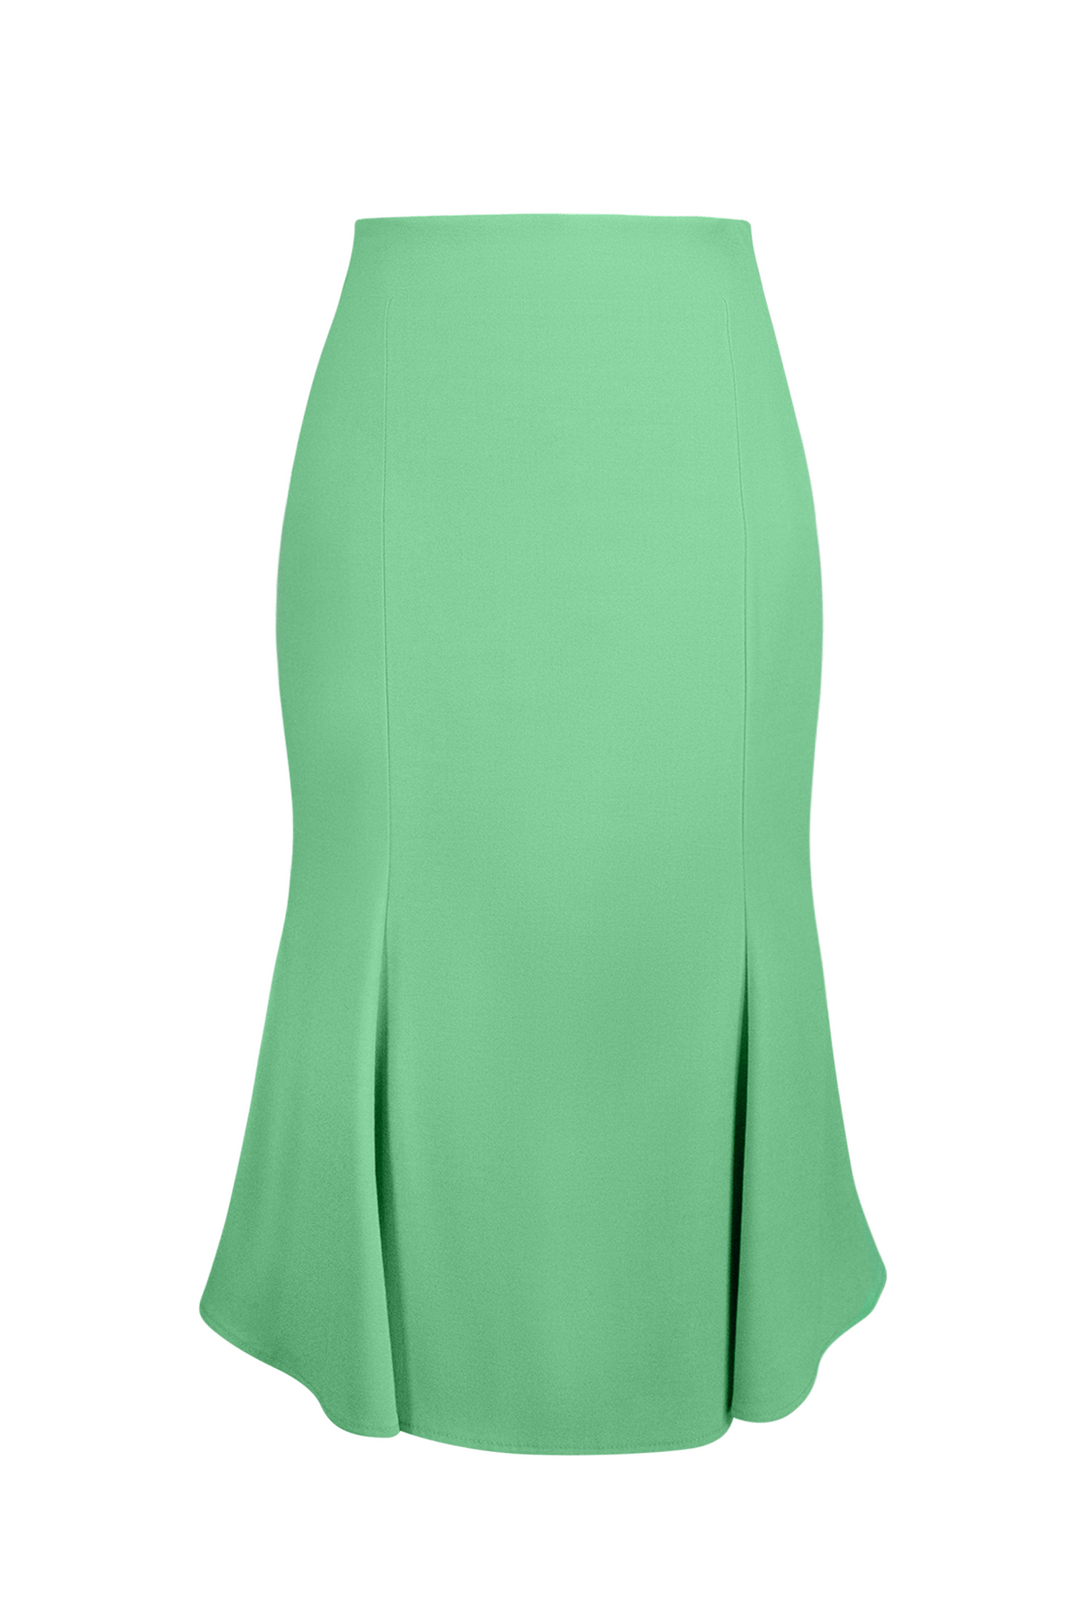 Cotton Tail Soiree Classic Skirt (Green) - Kitten D'Amour